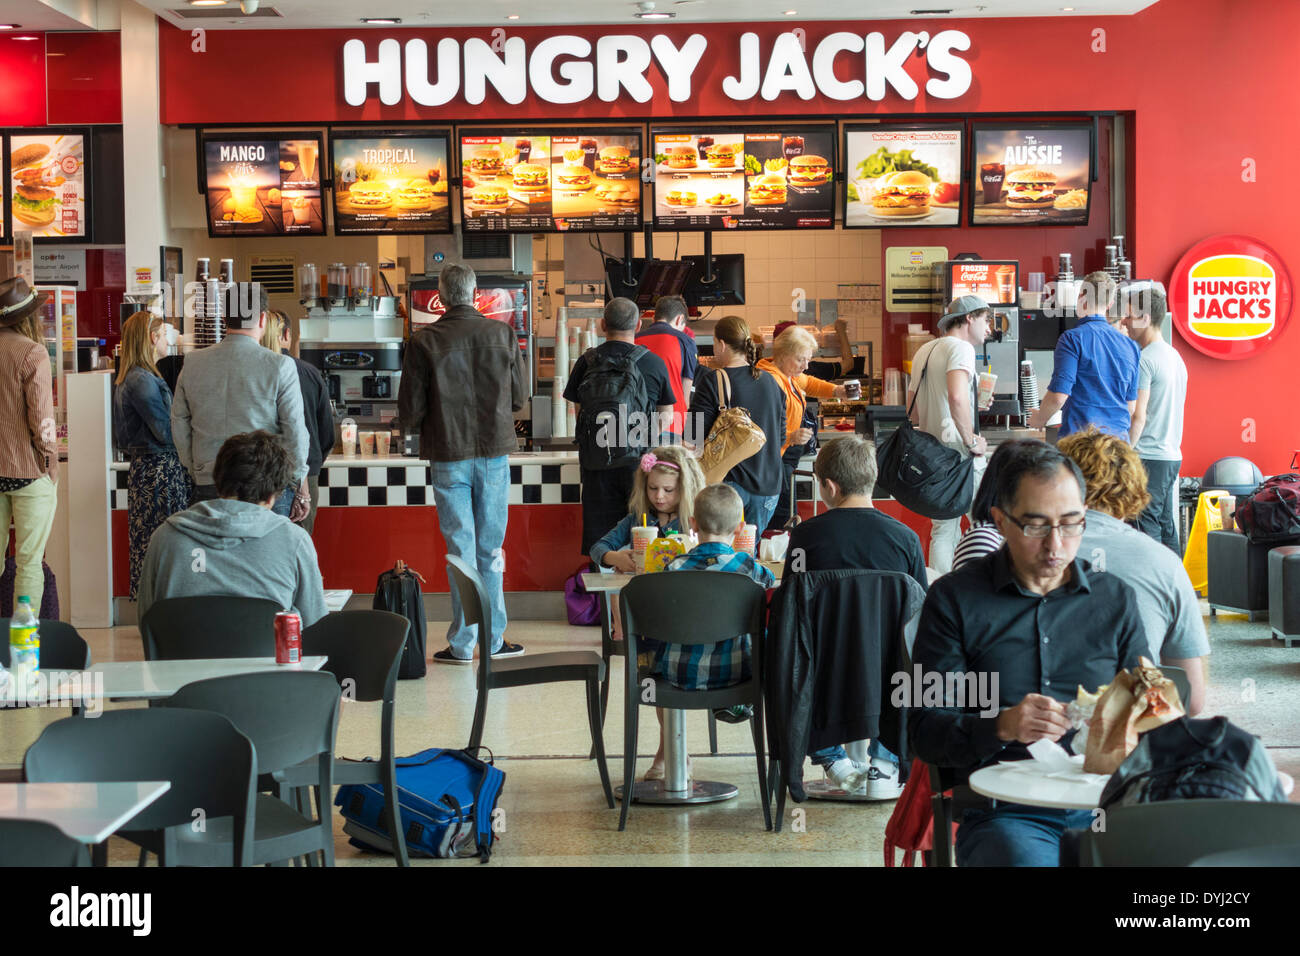 Melbourne Australien, Tullamarine Airport, MEL, Terminal, Gate, Food Court plaza, Hungry Jack's, Burger, Hamburger, Burger King, Burger, Hamburger, Fast Food, r Stockfoto